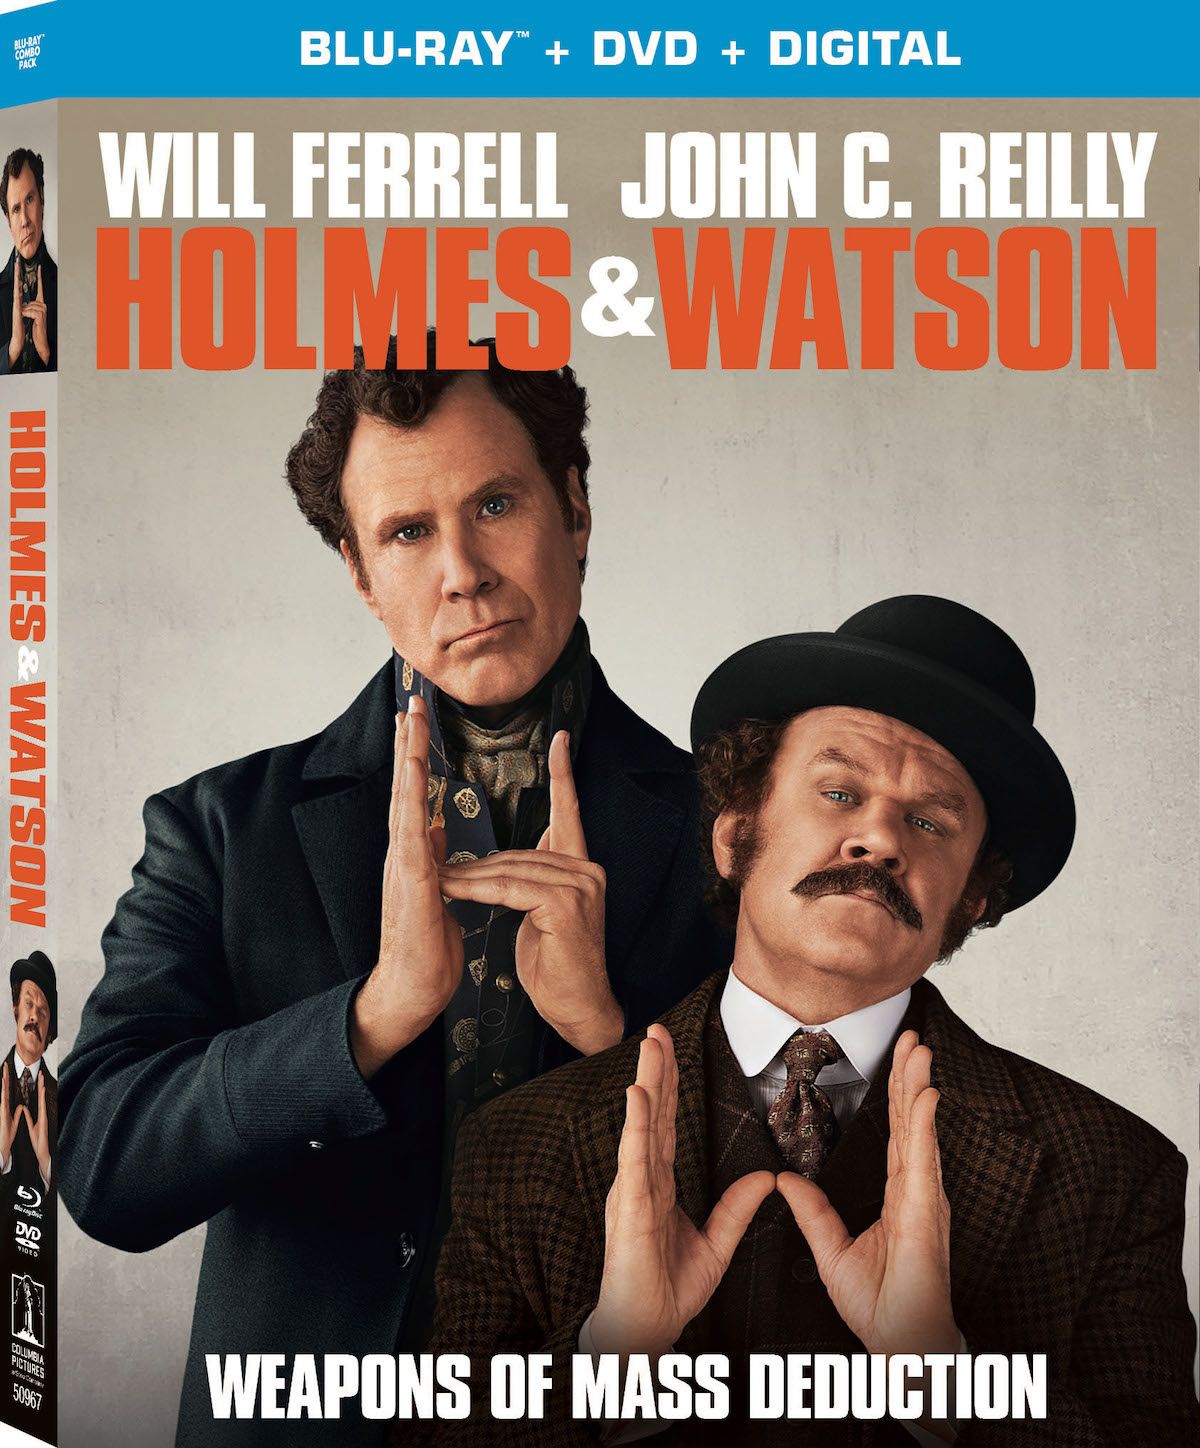 Holmes & Watson Blu-ray DVD cover art